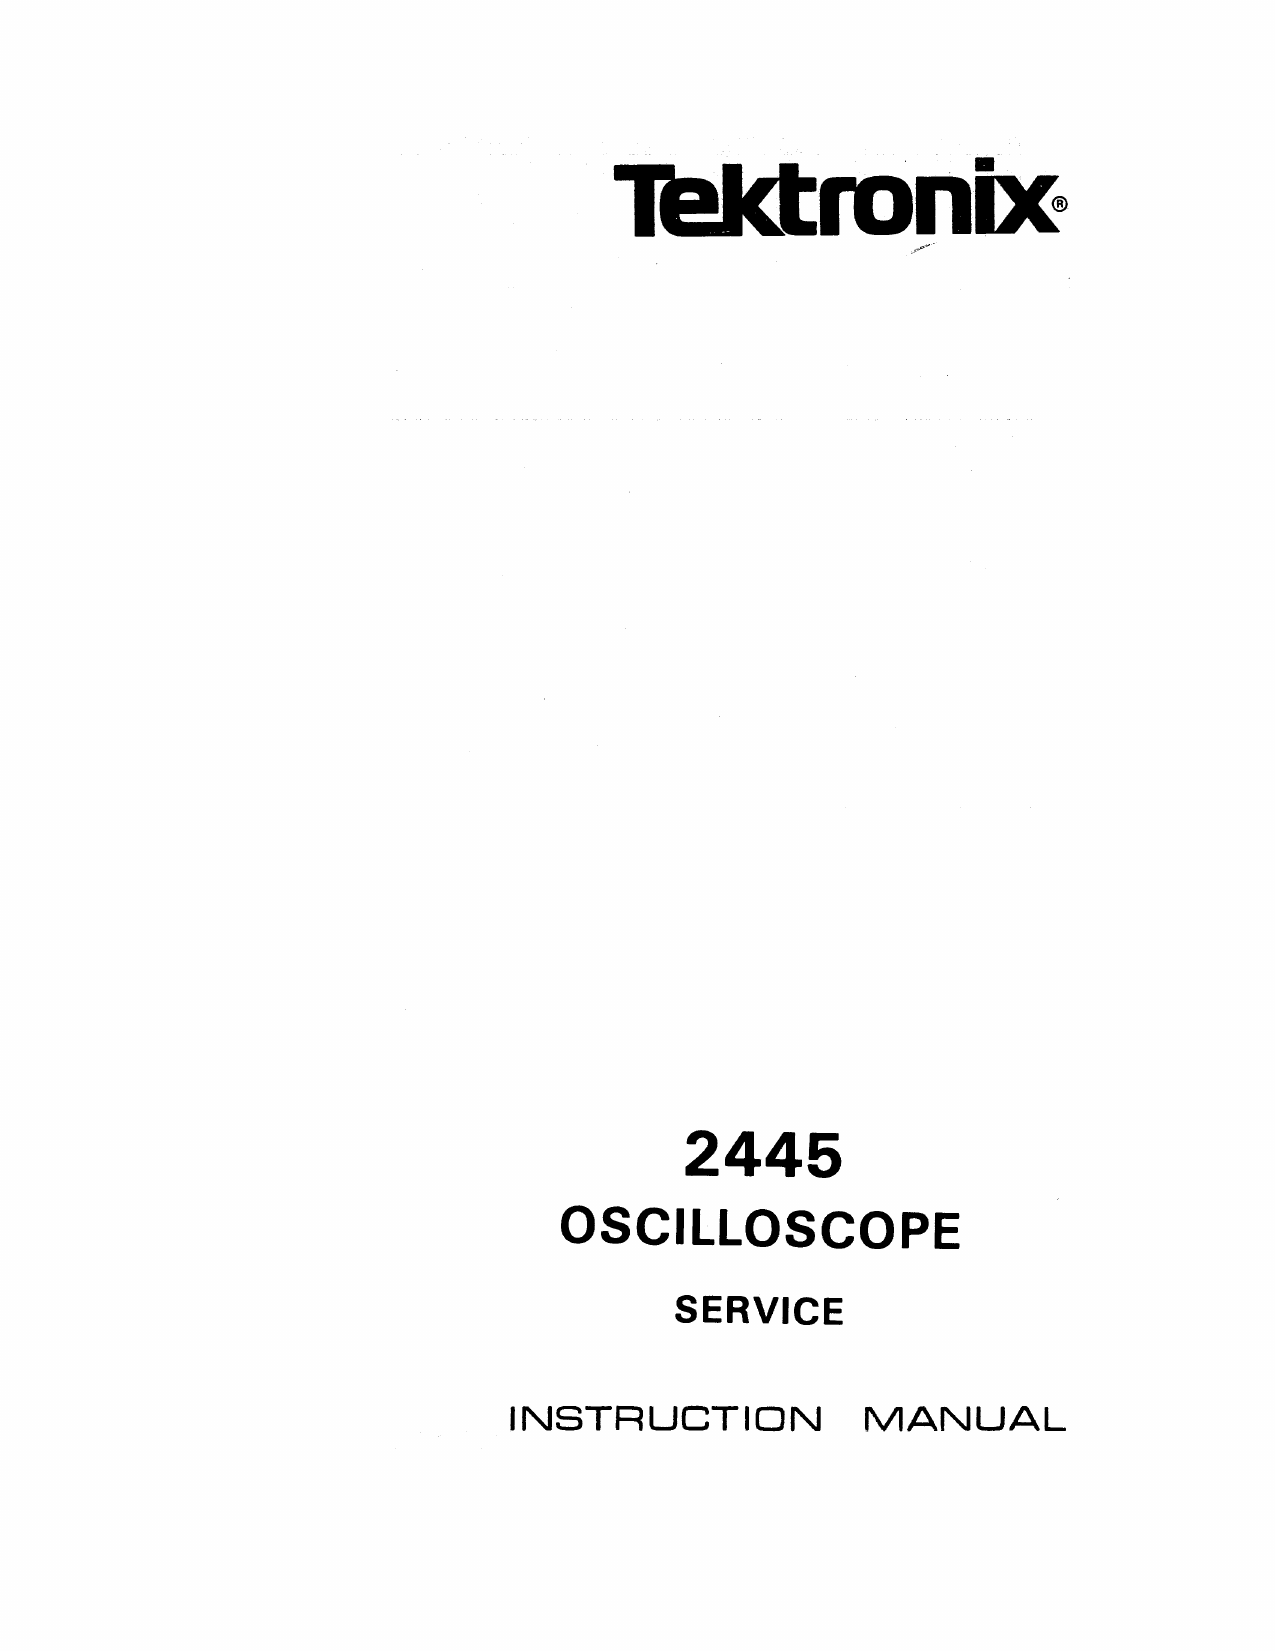 Tektronix TEK 2337 Service Operators Manual CD With Complete A3 Diagrams 